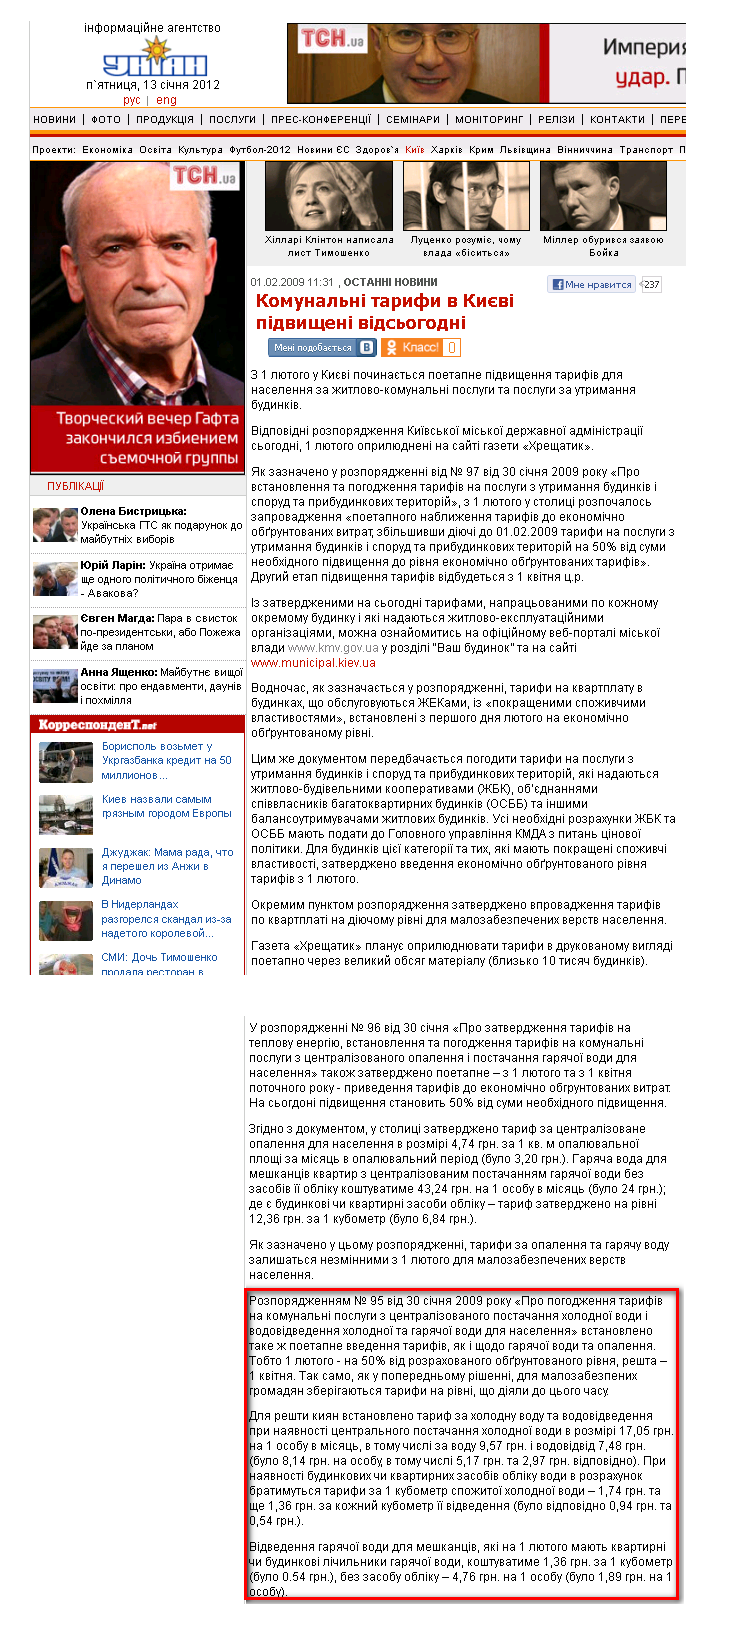 http://www.unian.net/ukr/news/news-298255.html